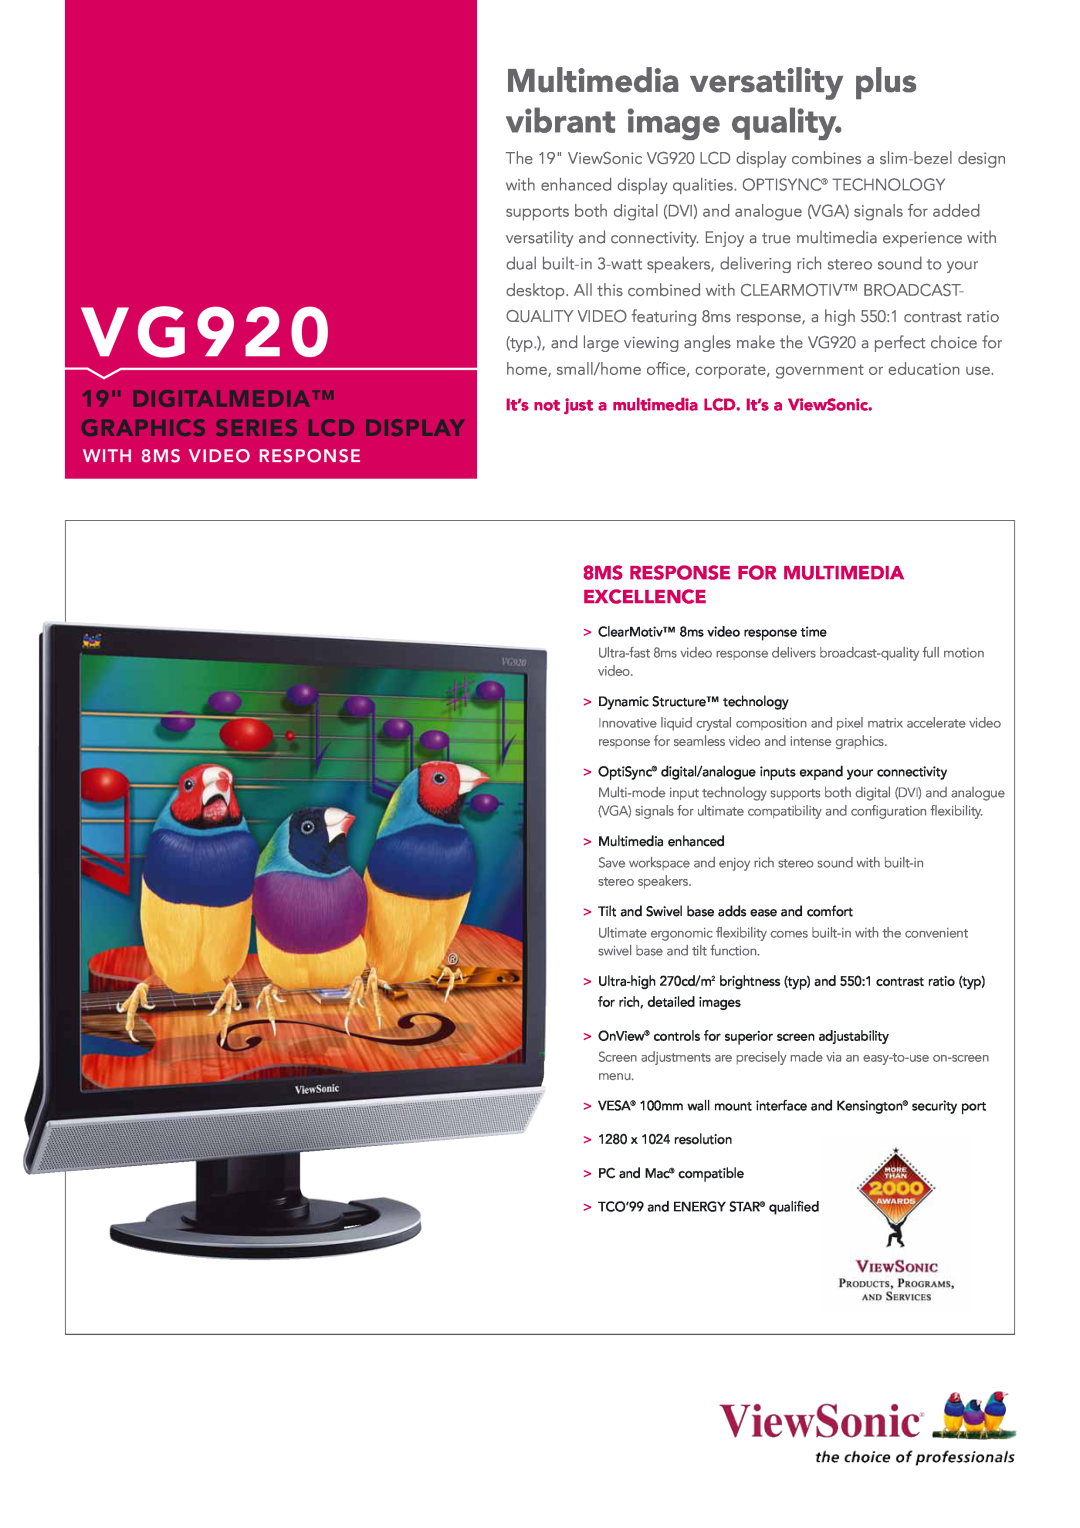 ViewSonic manual ViewSonic, VG920 LCD Display 